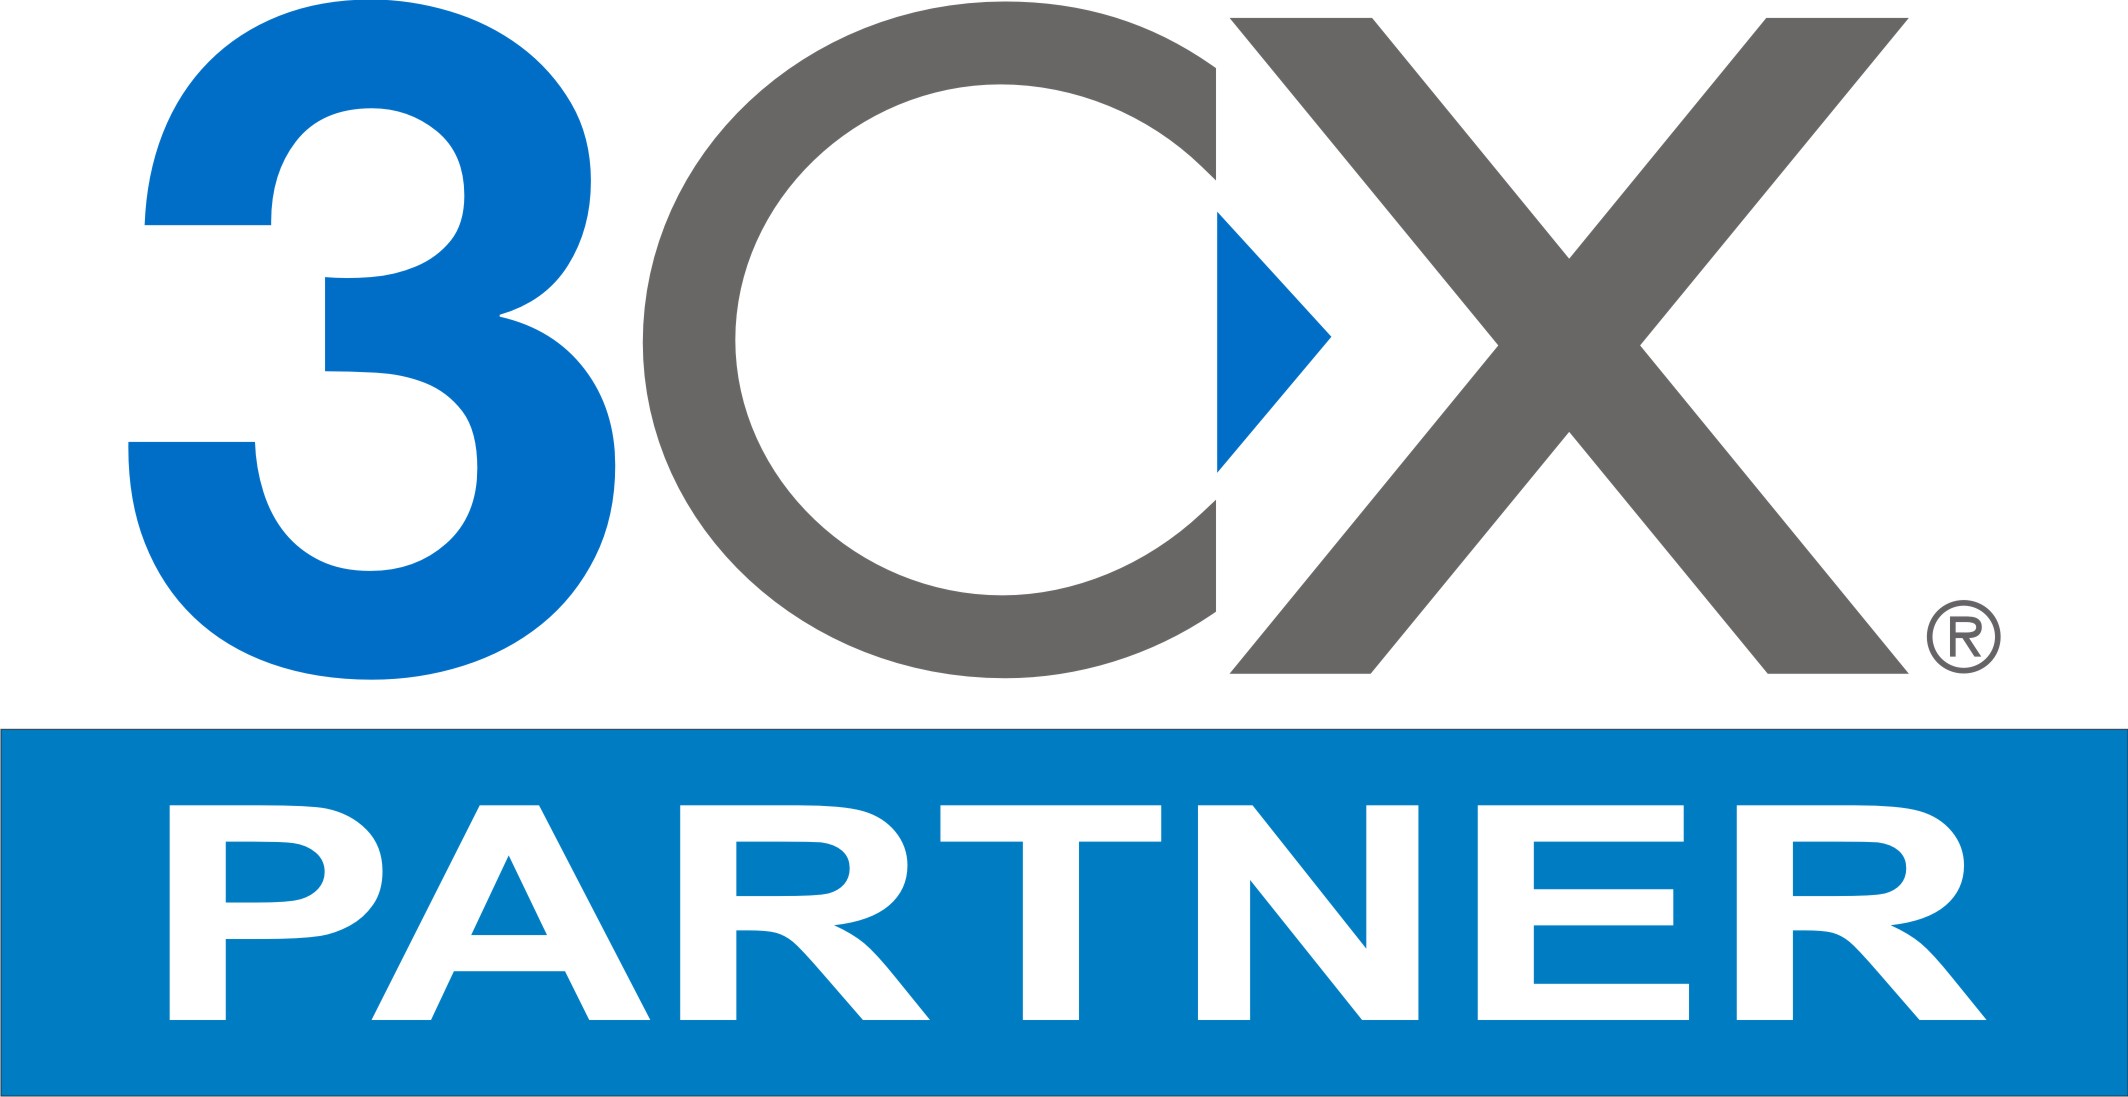 3CX-partner-logo